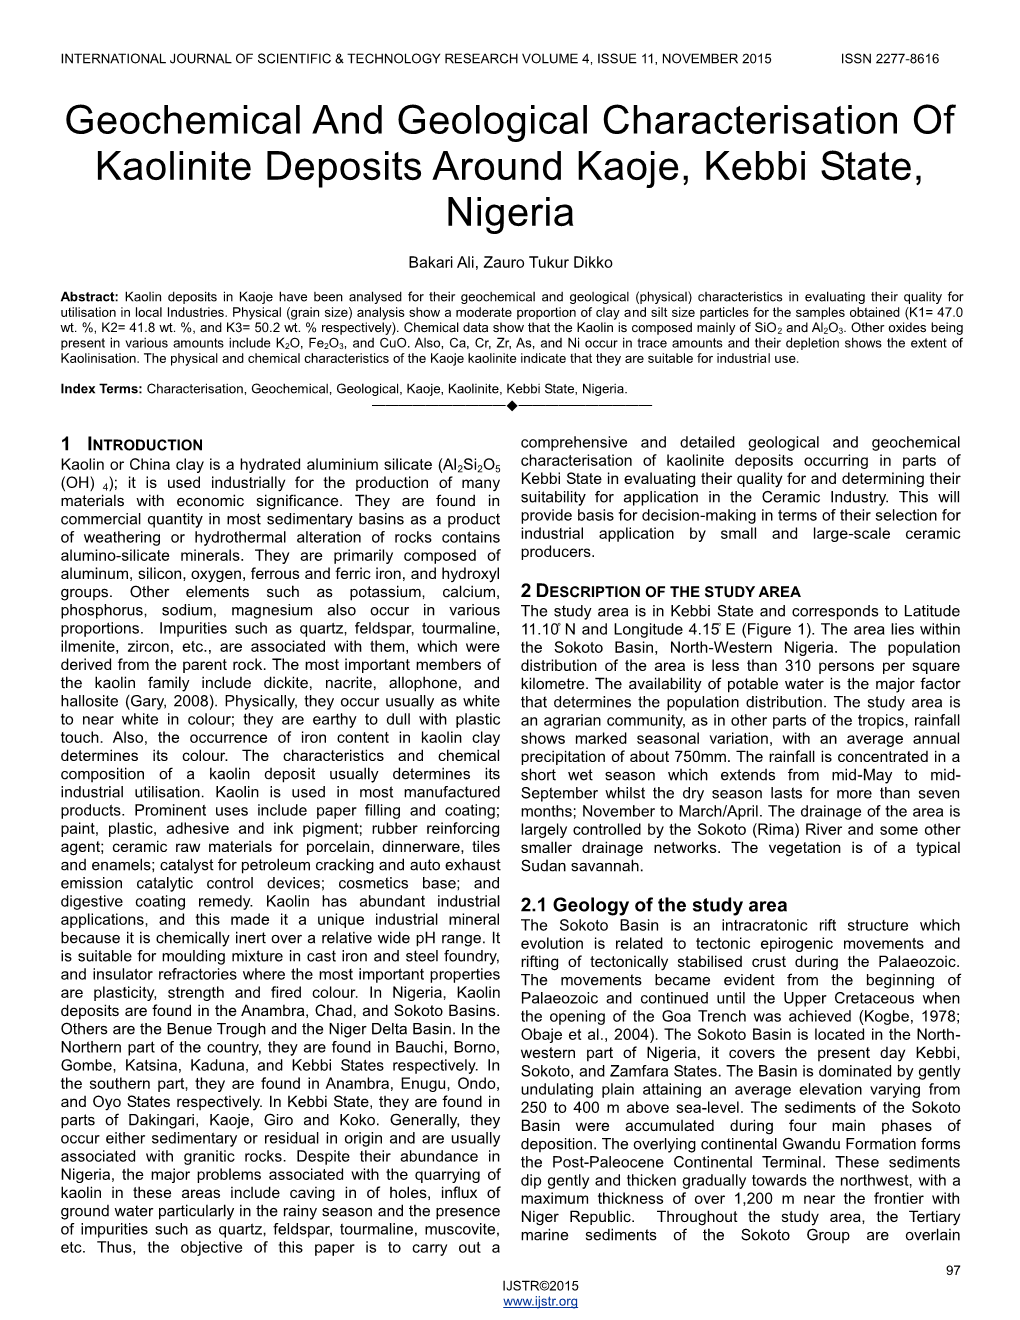 Geochemical and Geological Characterisation of Kaolinite Deposits Around Kaoje, Kebbi State, Nigeria